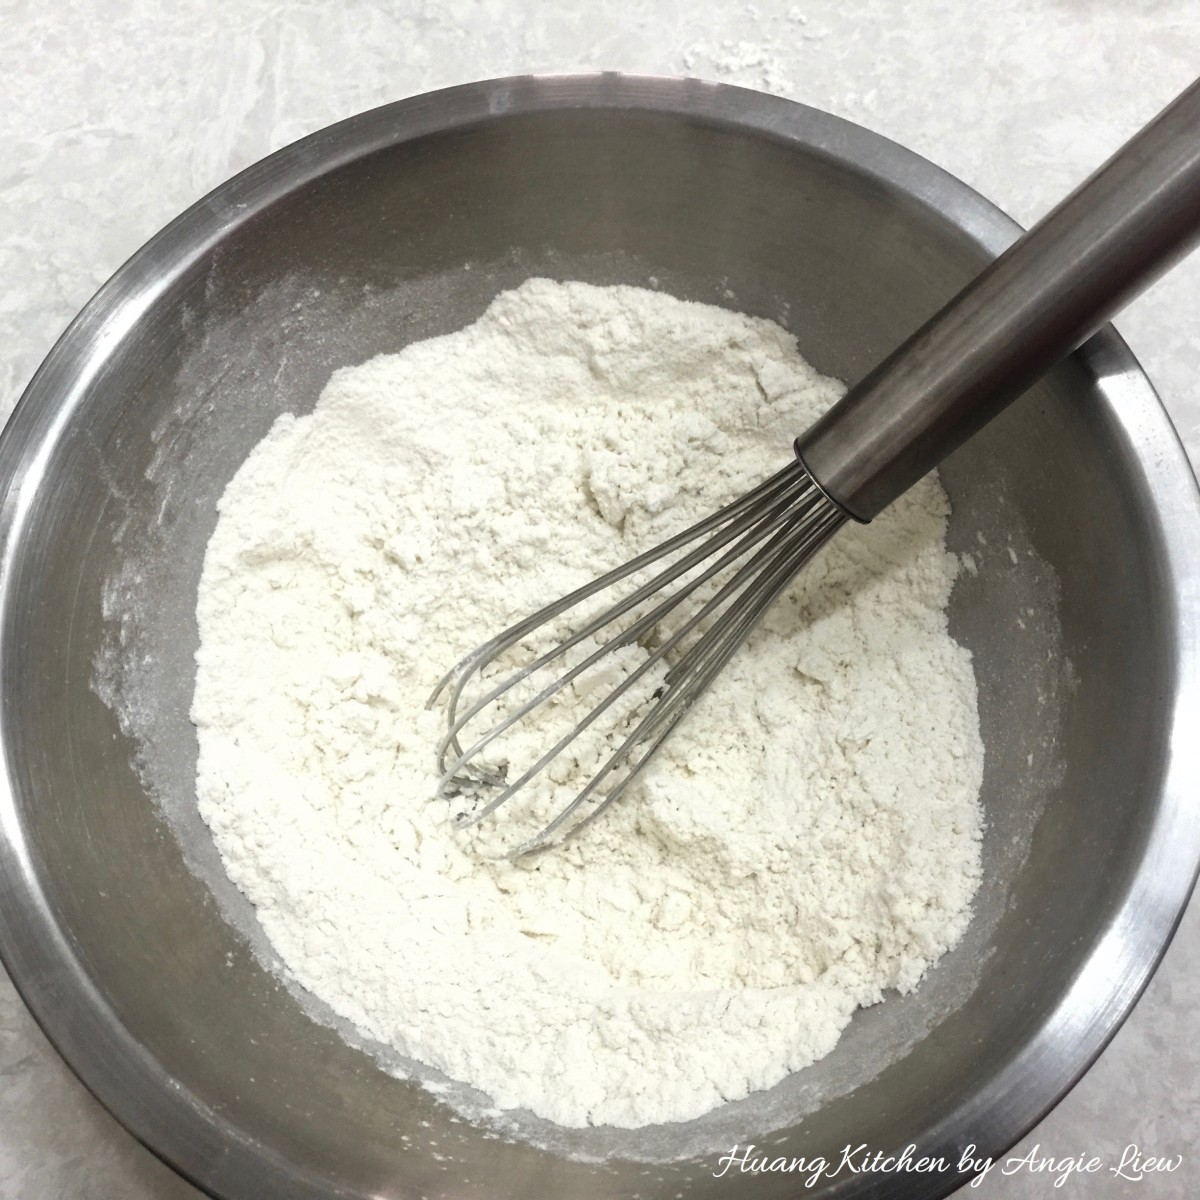 Christmas Thumbprint Cookies Recipe - whisk flour